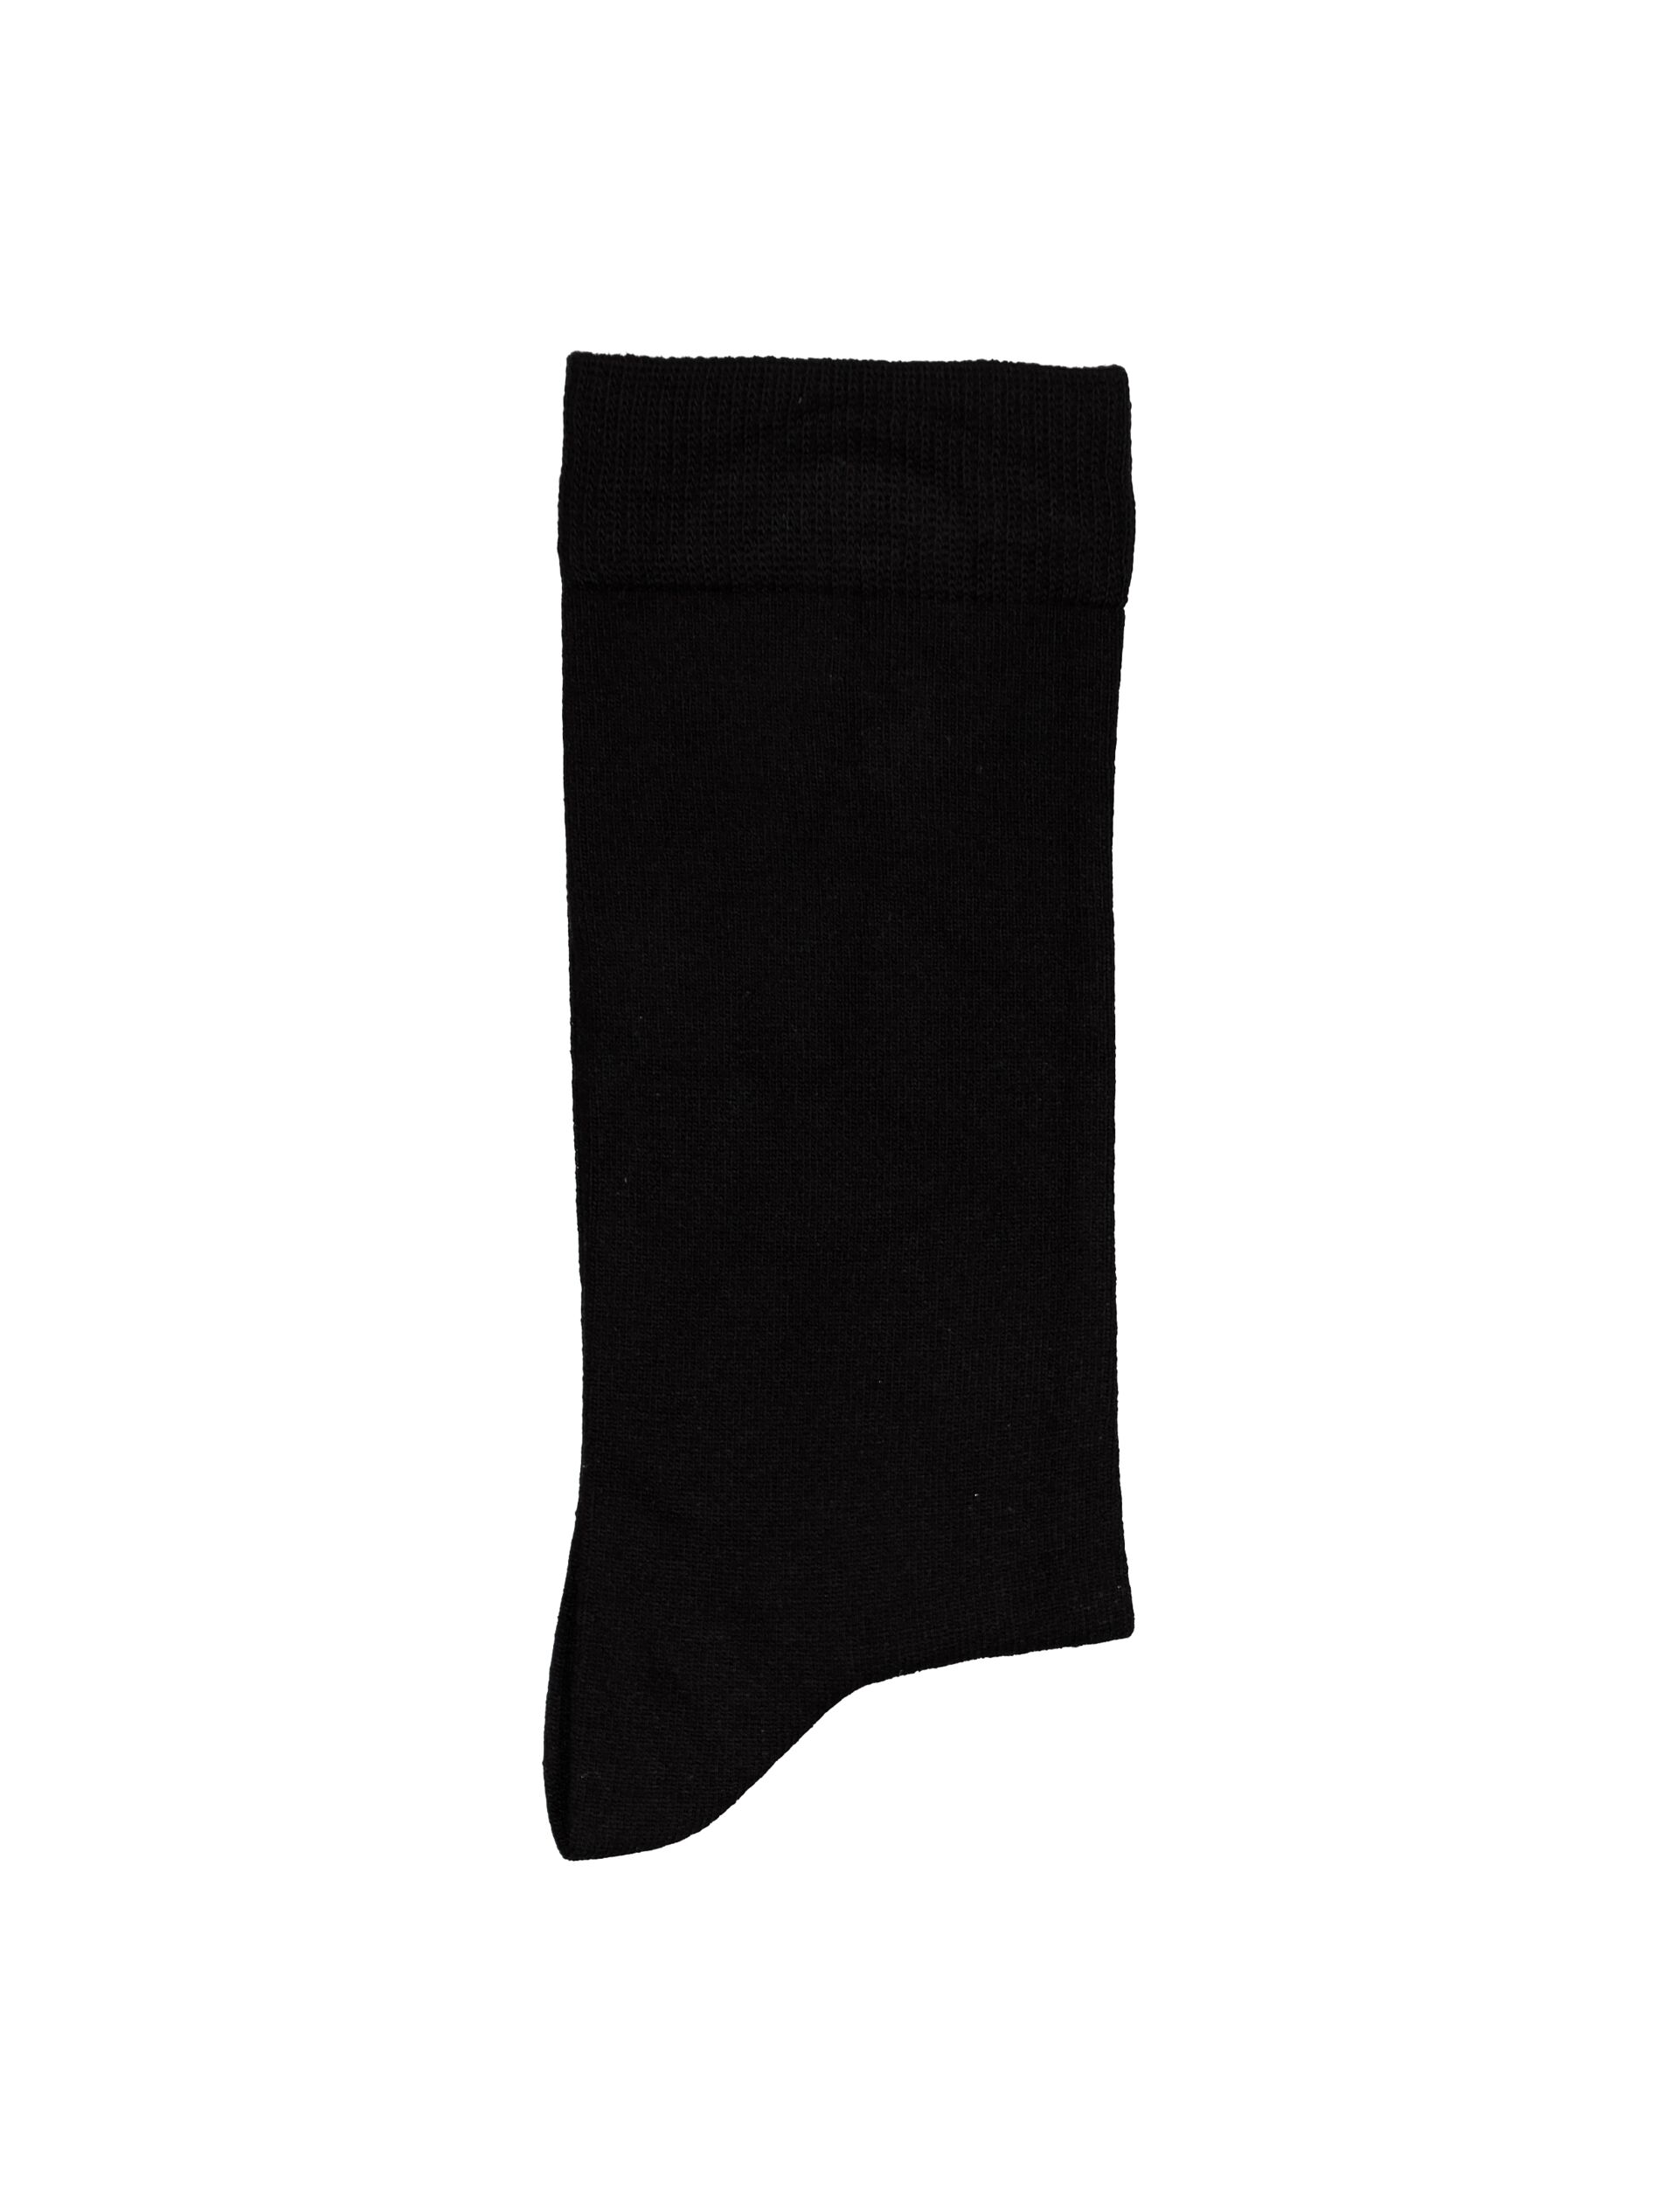 Socks 30-991028